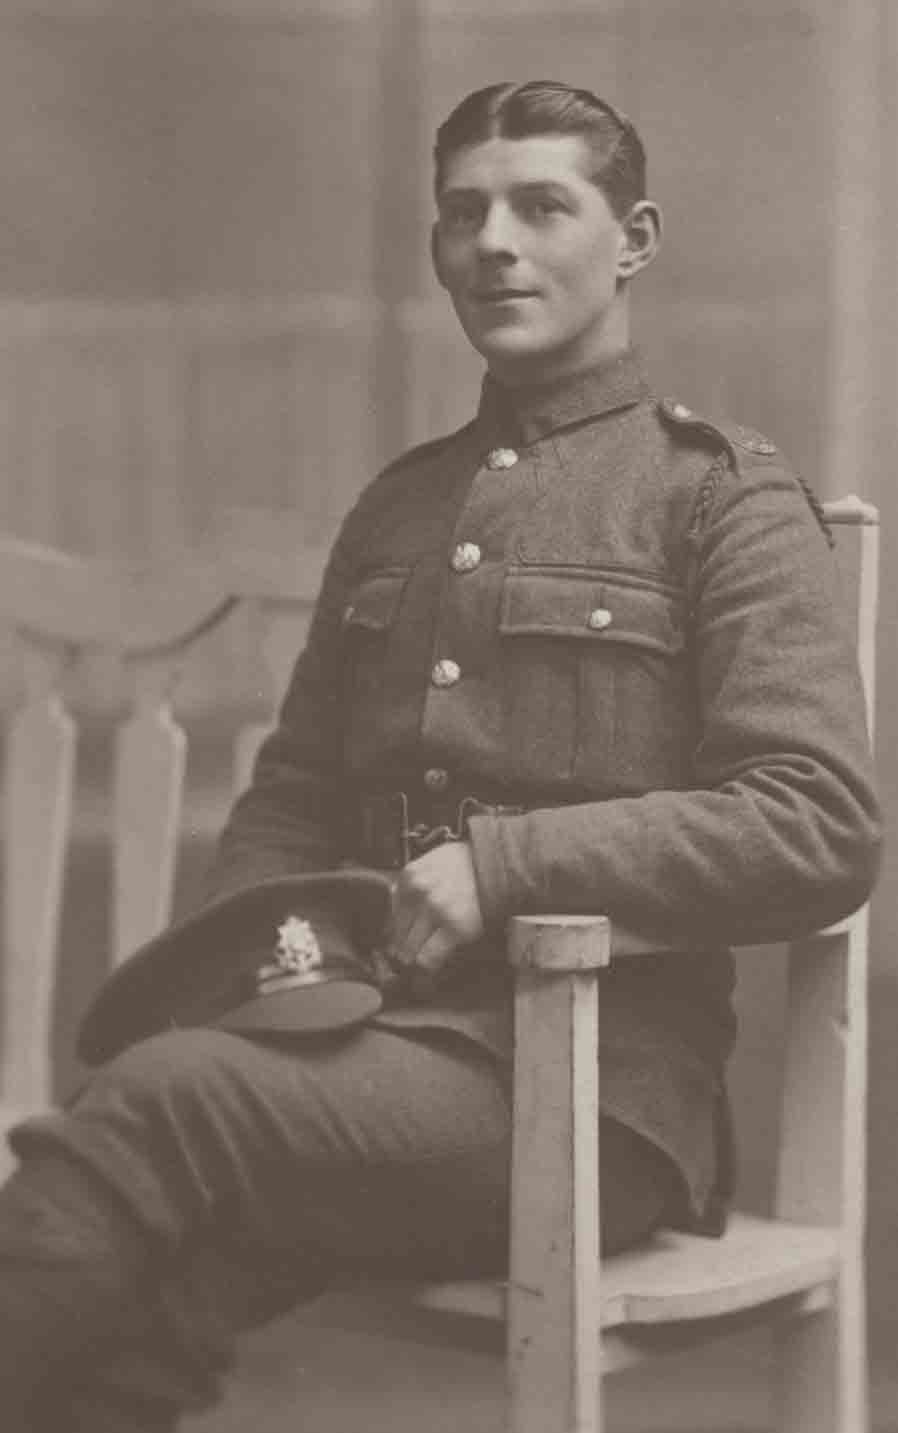 Reginald in uniform during World War I